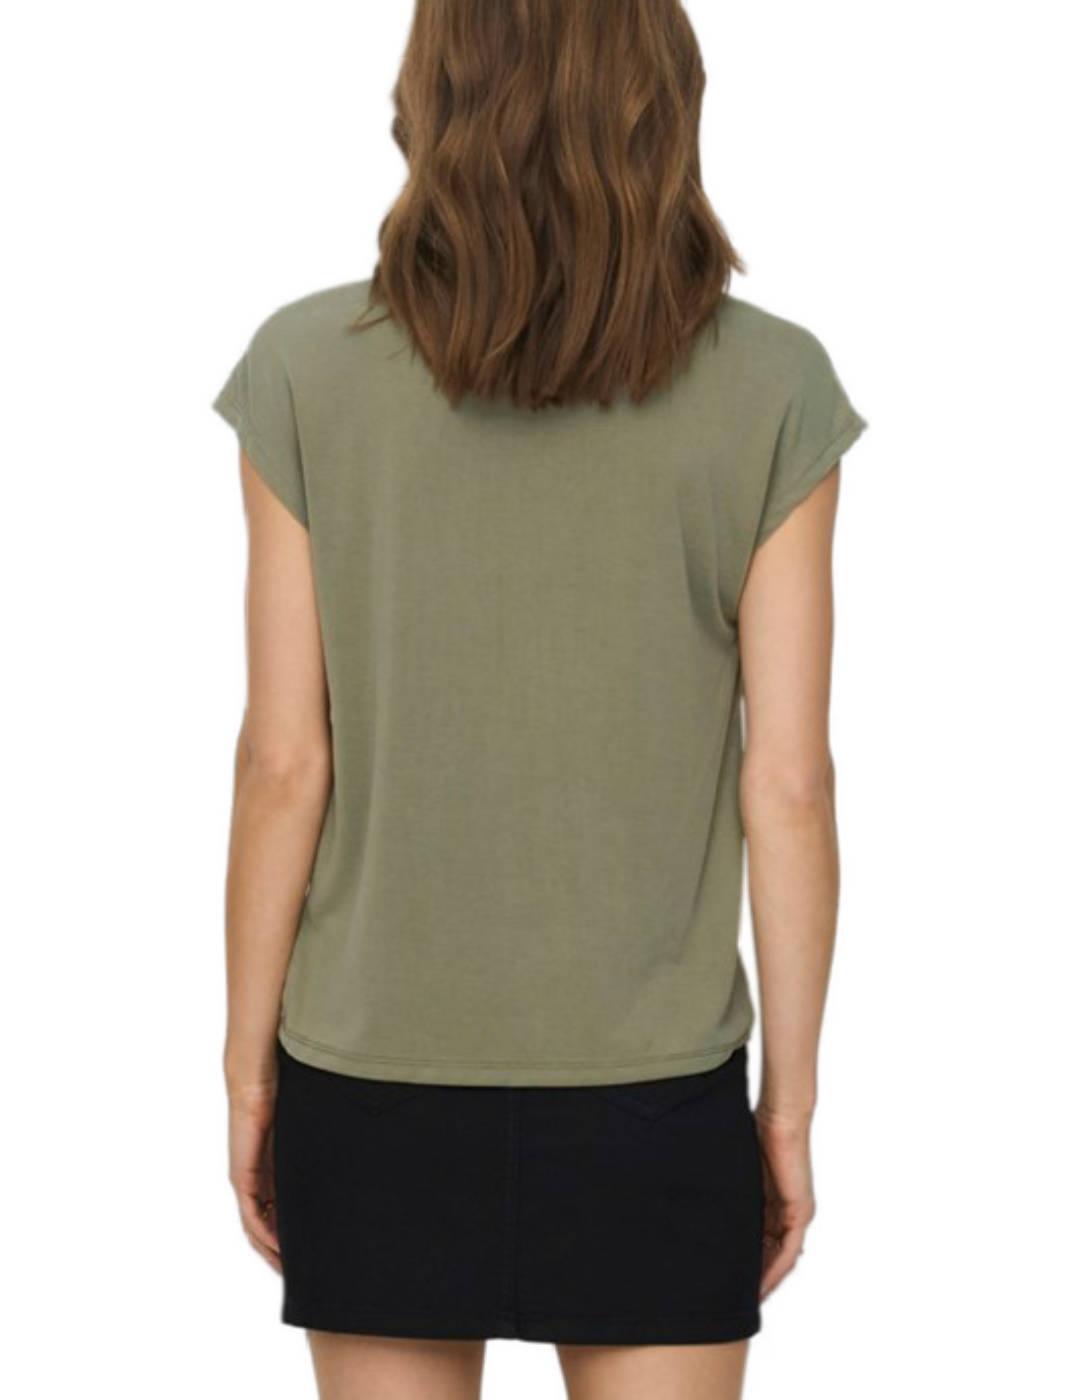 Camiseta Only Free verde cuello pico manga corta de mujer